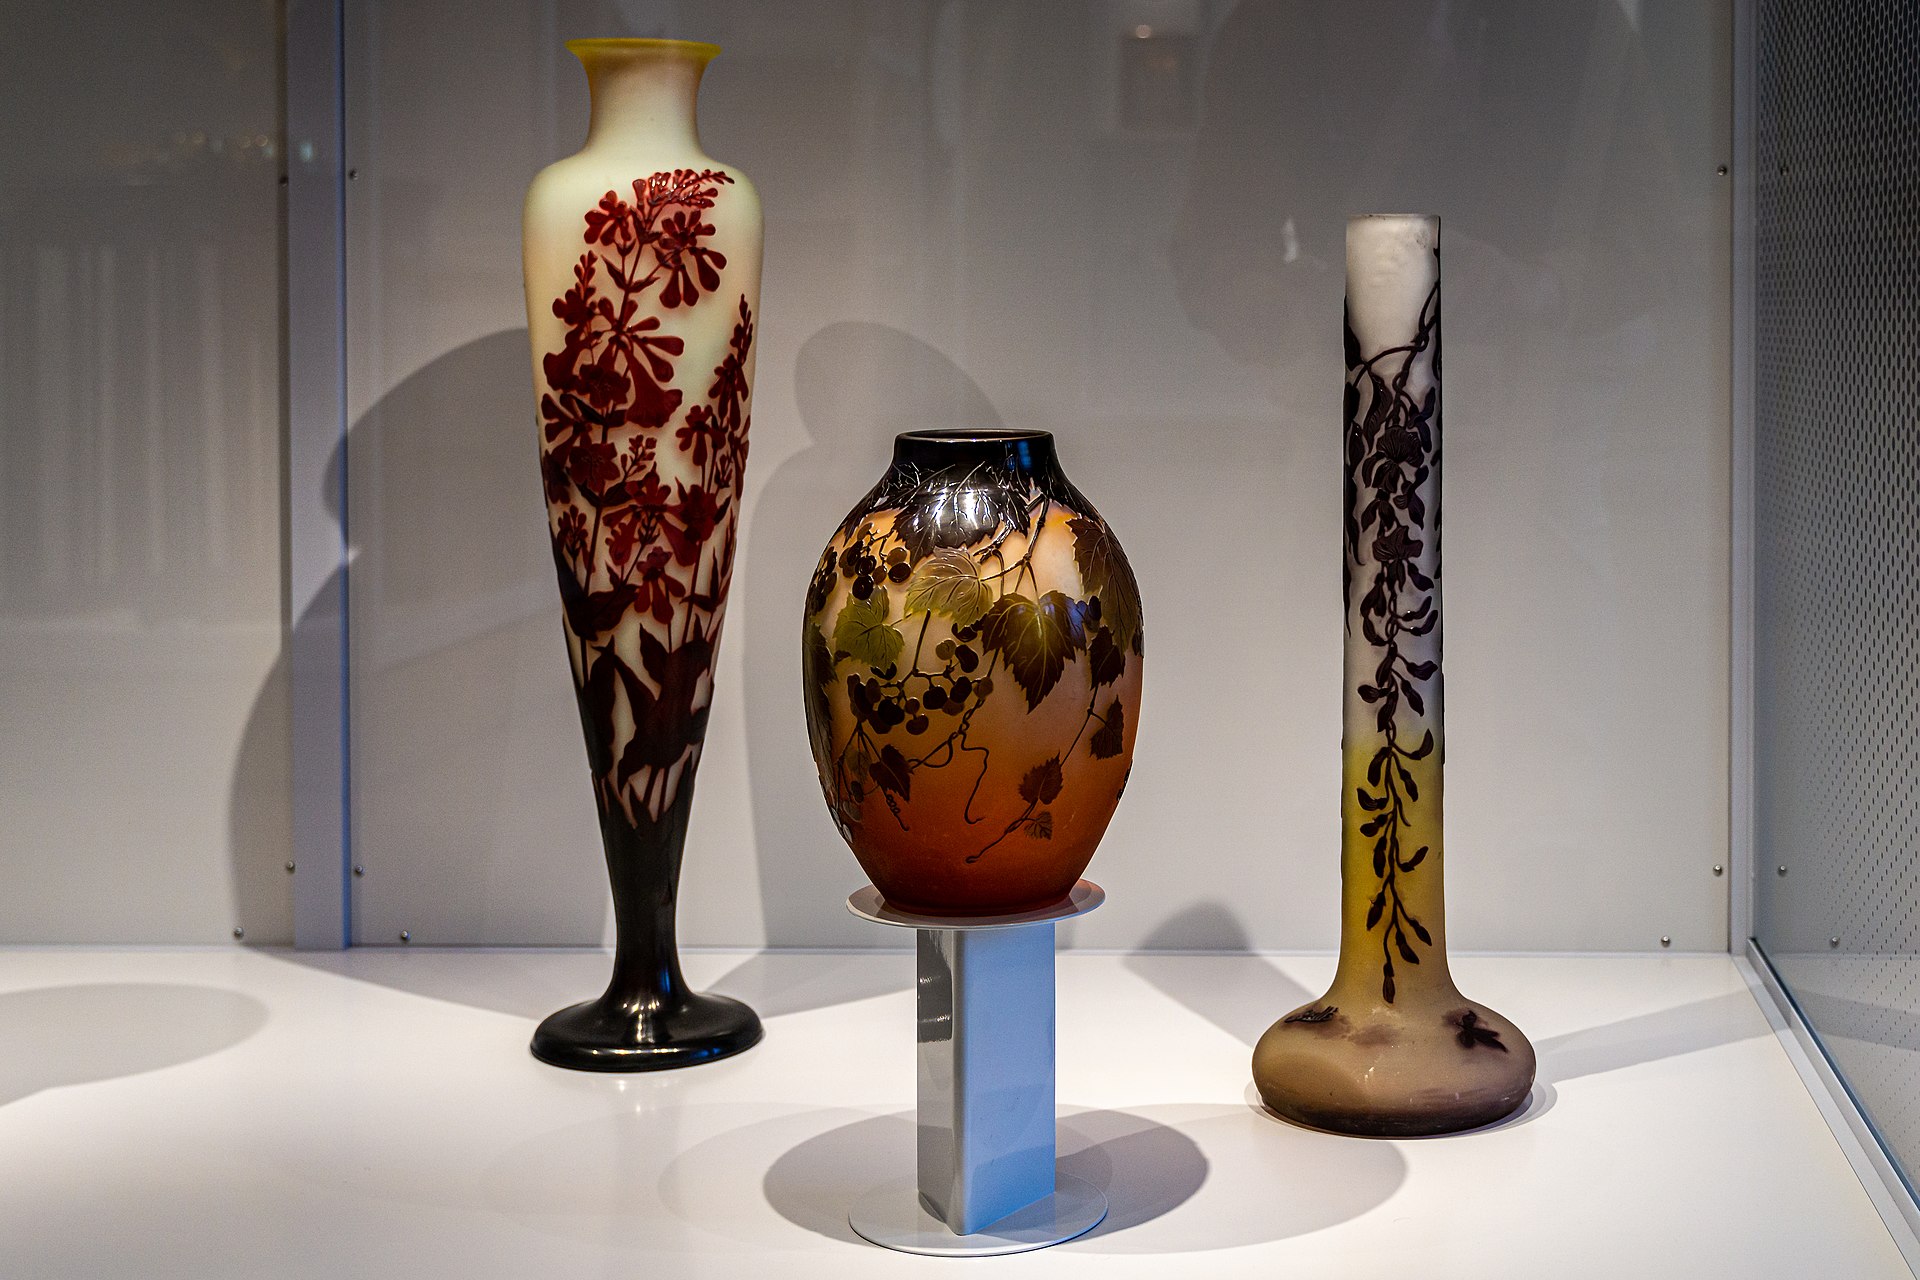 Emile Galle's art glass